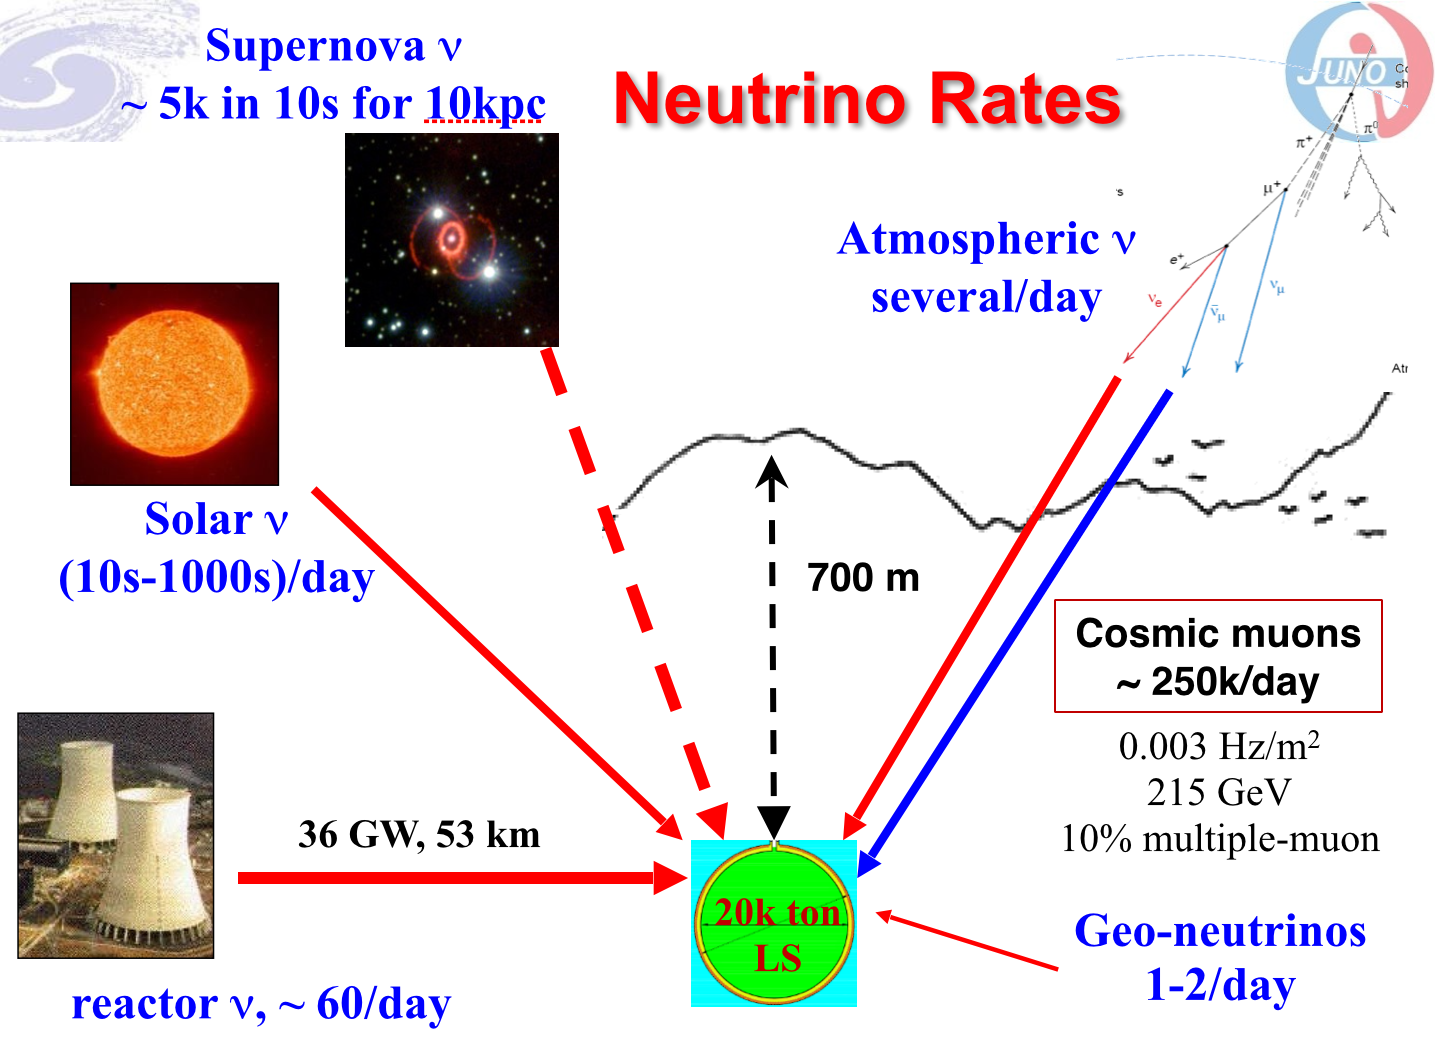 /env/presentation/CJ_JUNO_NeuTel2015_NeutrinoRates.png